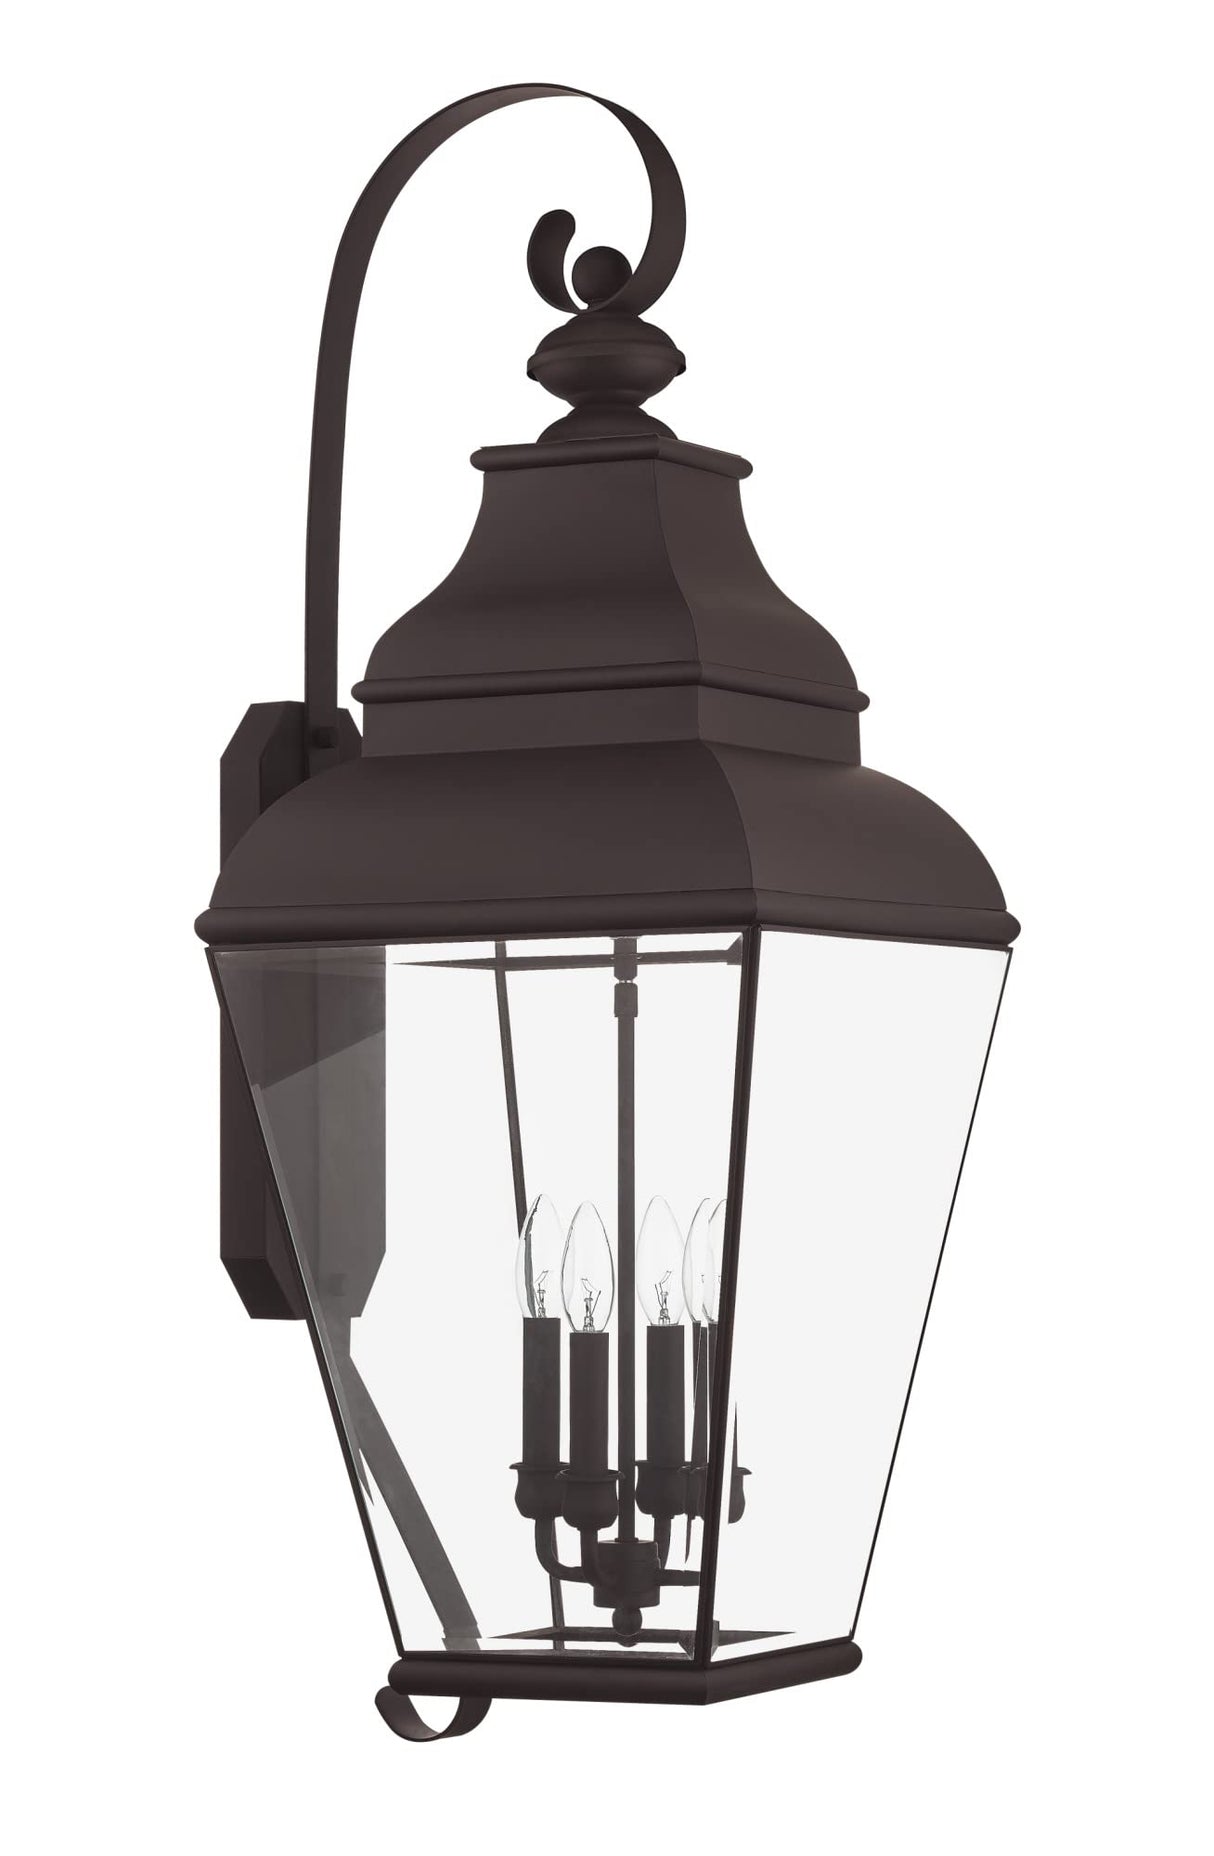 Livex Lighting 2596-04 Black Exeter 4 Light Outdoor Wall Lantern